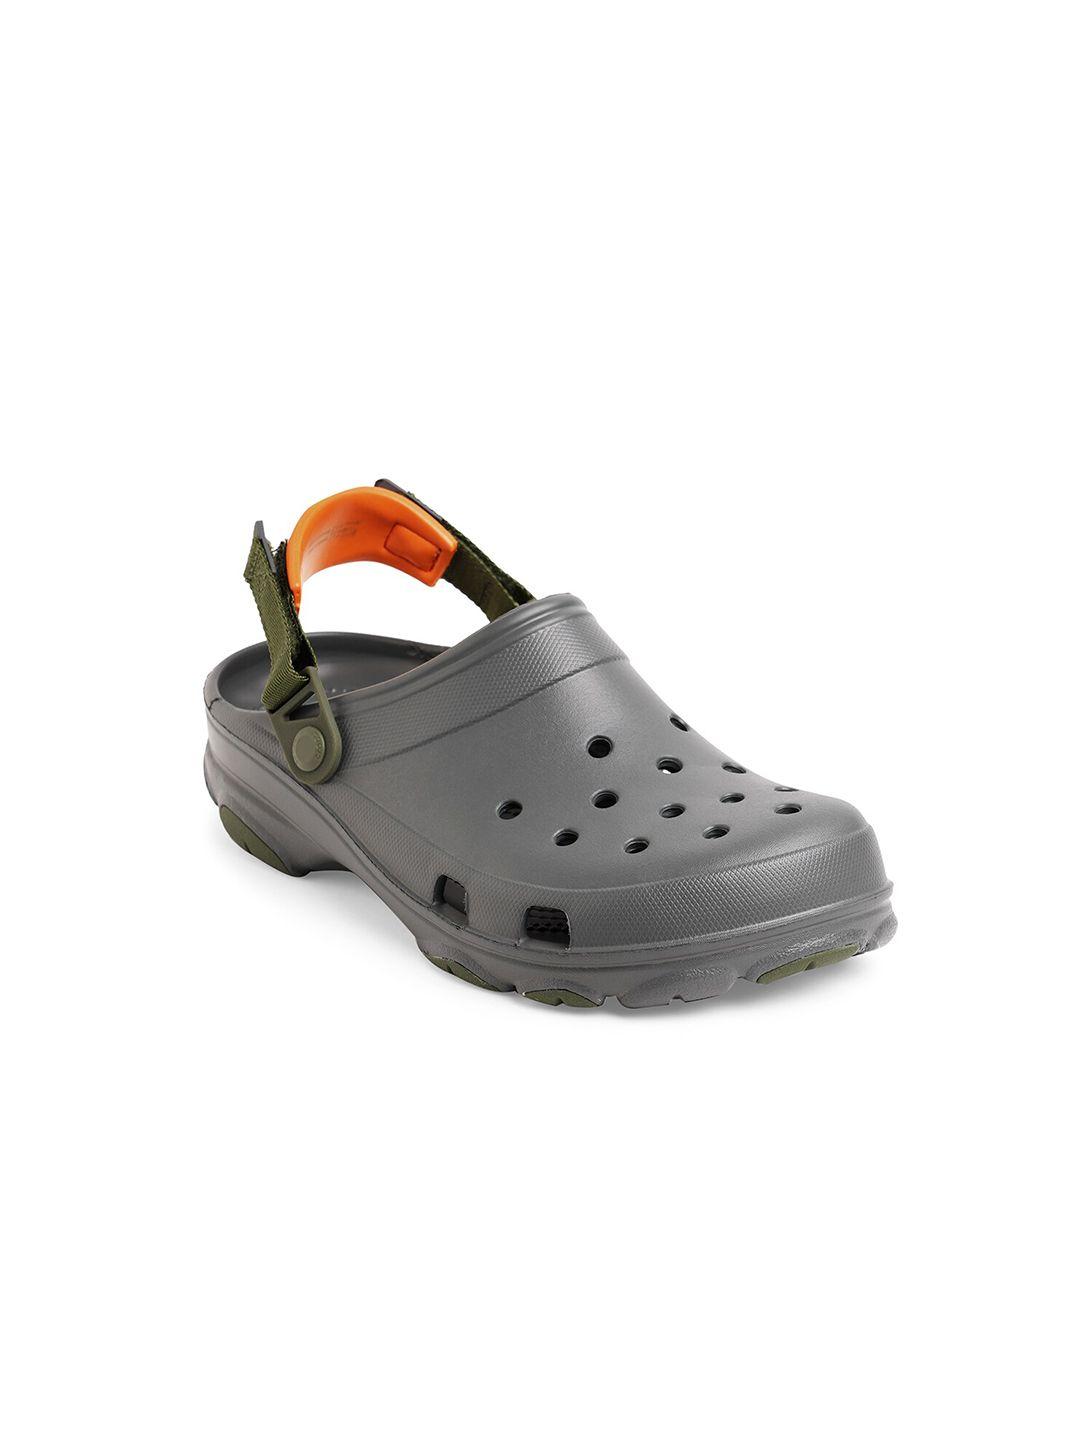 Crocs Unisex Grey & Orange Clogs Sandals